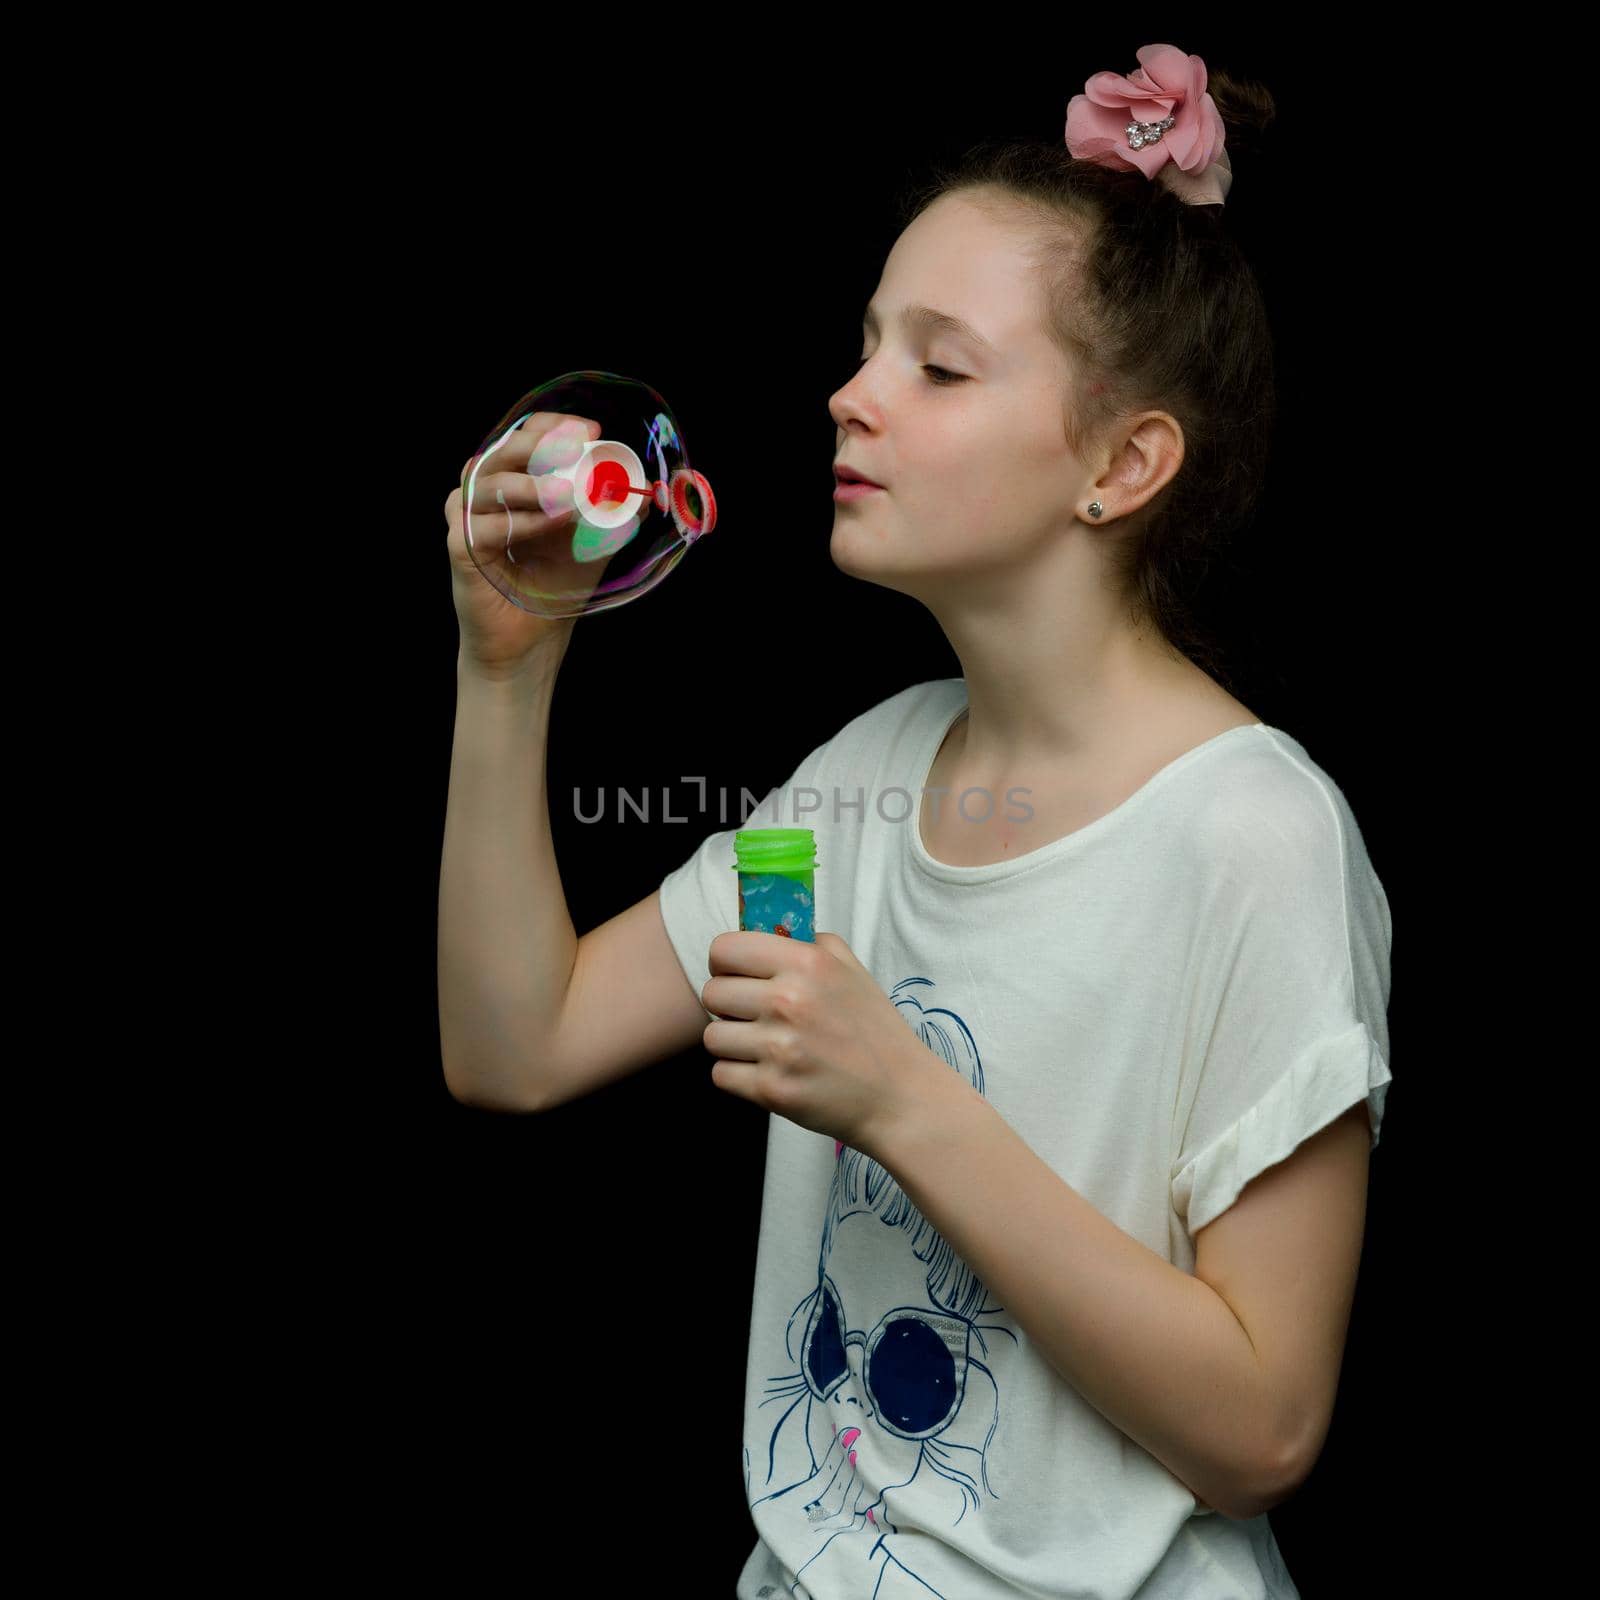 Cute little girl blows soap bubbles. On black background